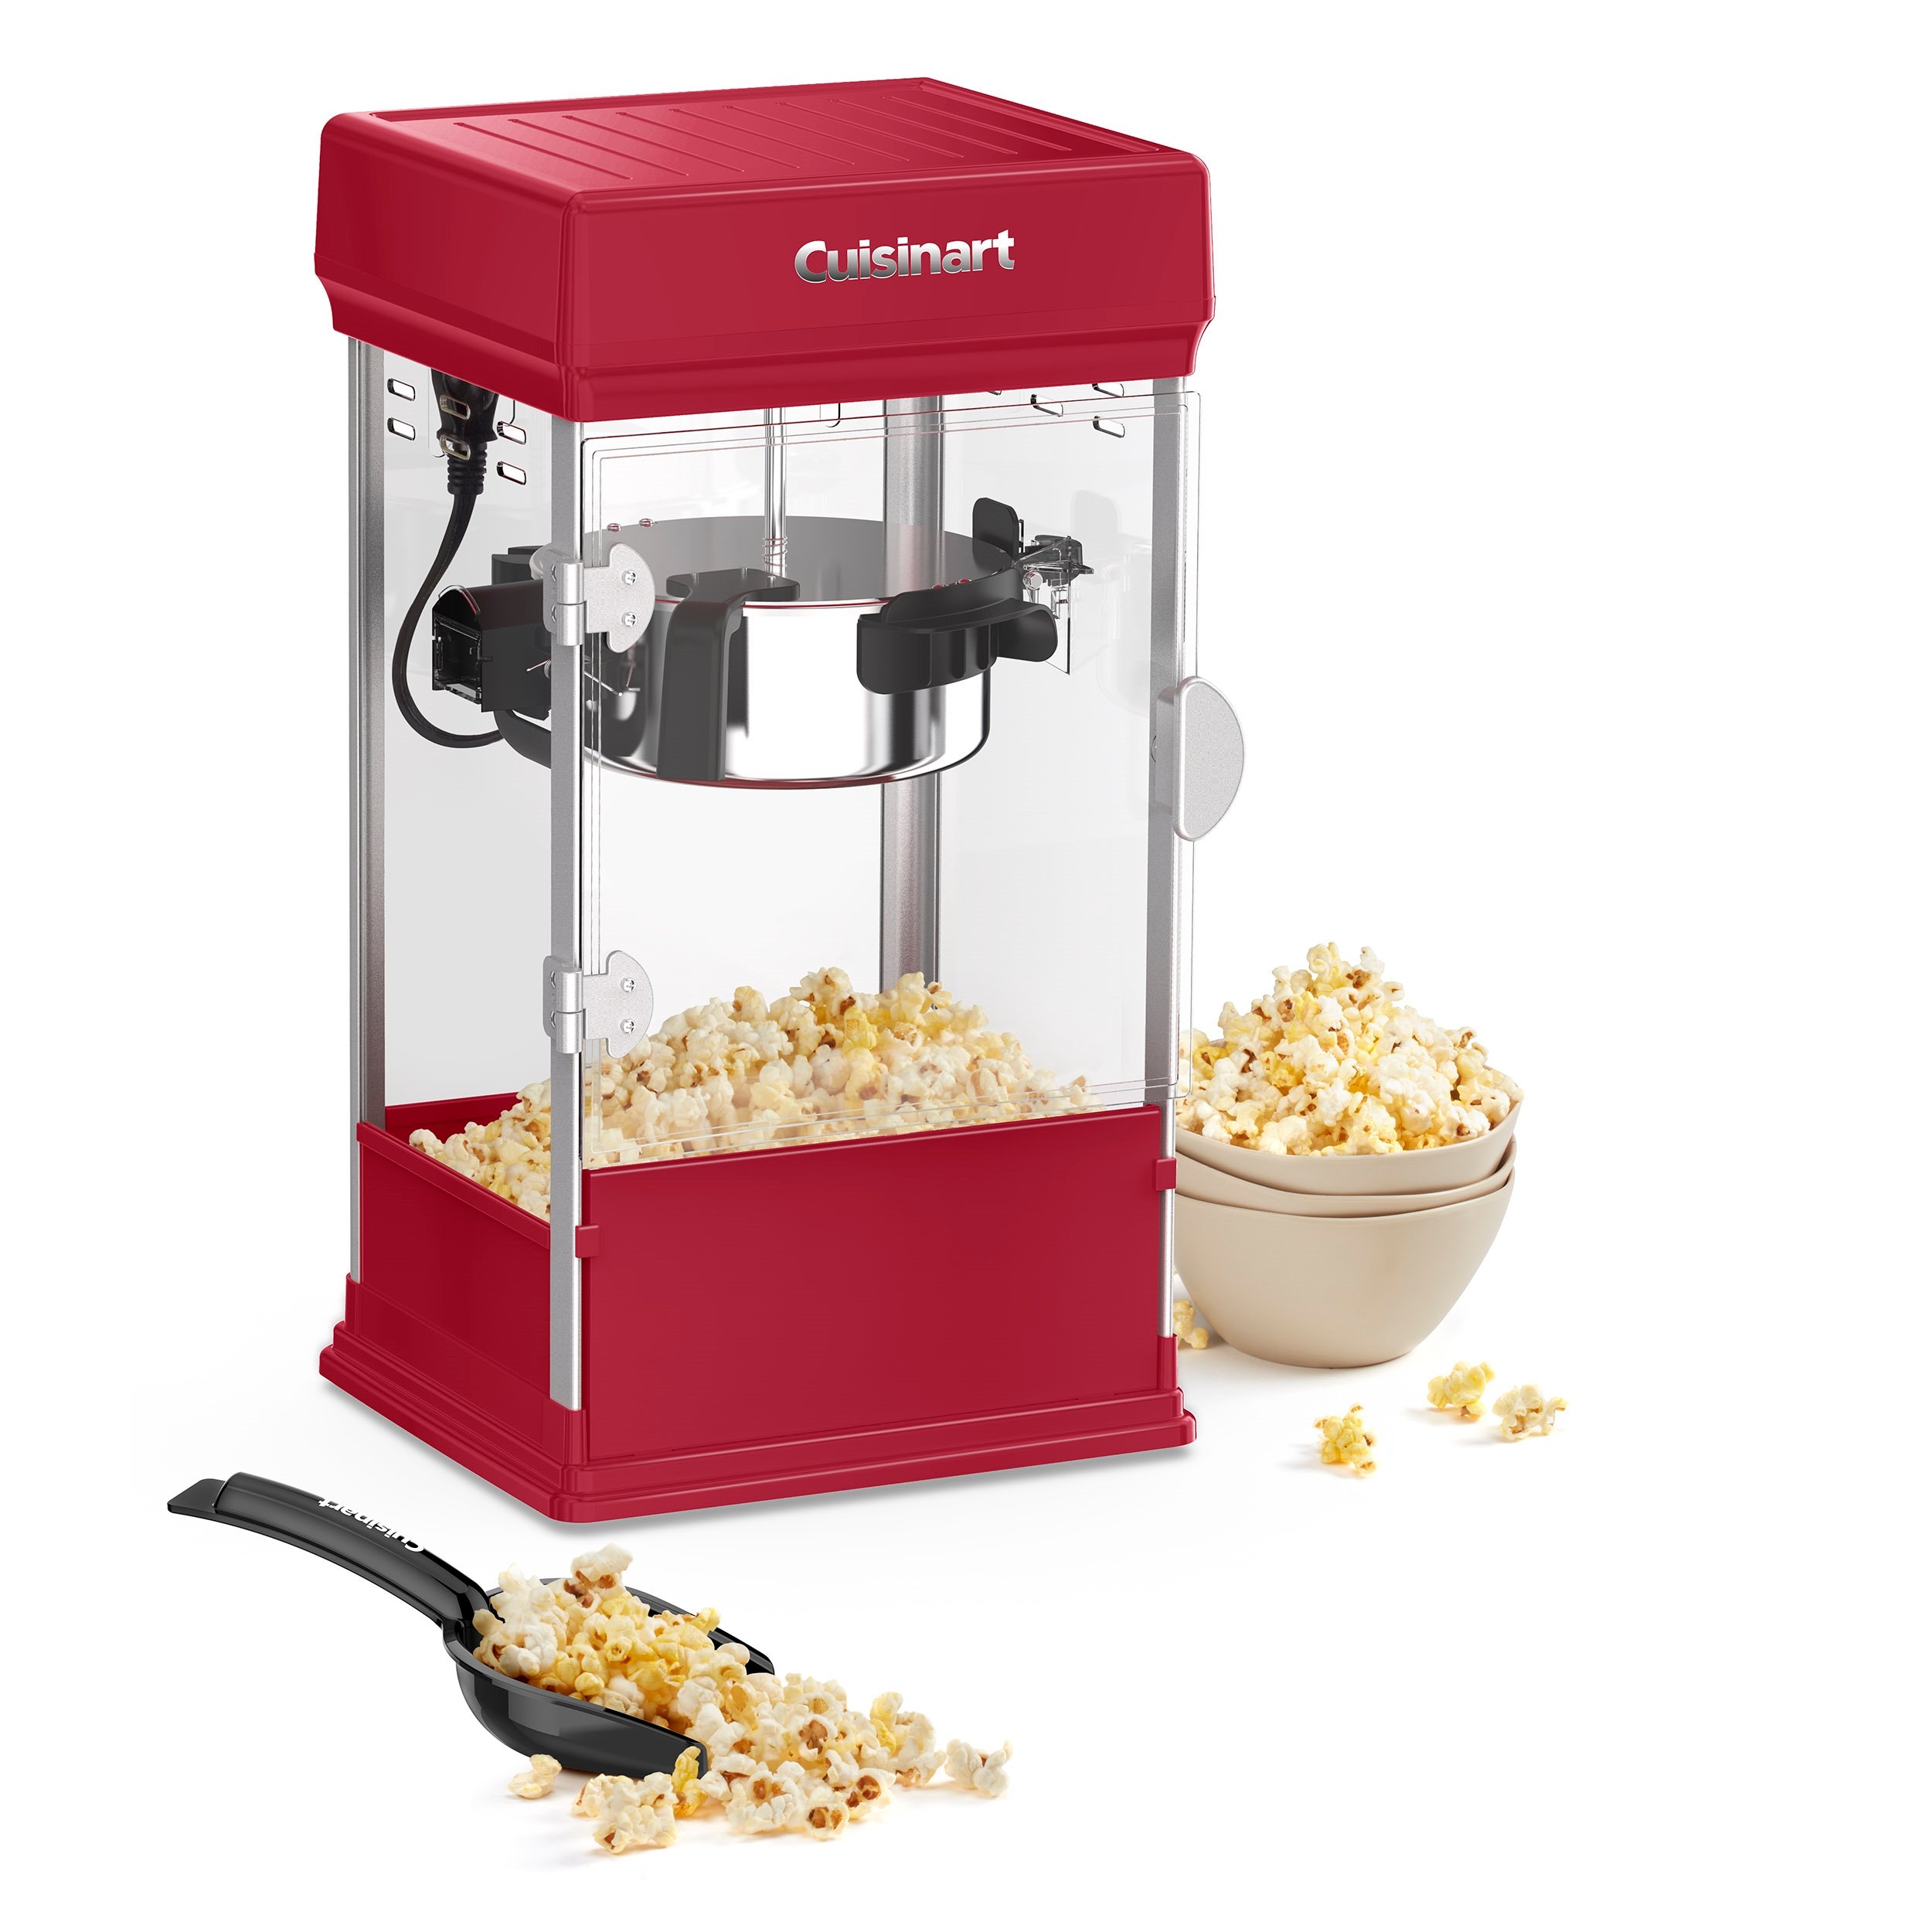 Theater-Style Popcorn Maker